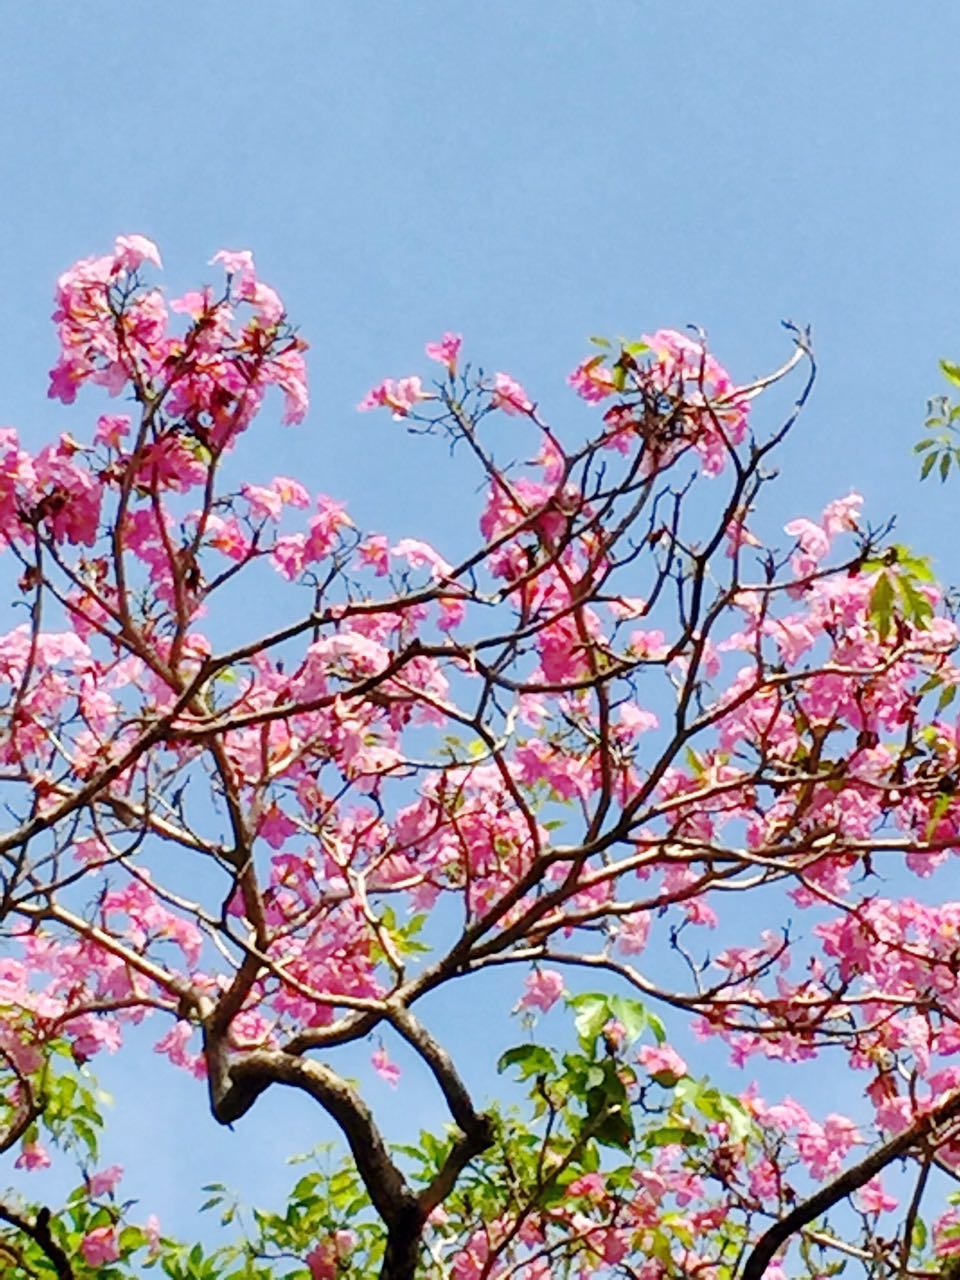 1. pink Tecoma blossoms